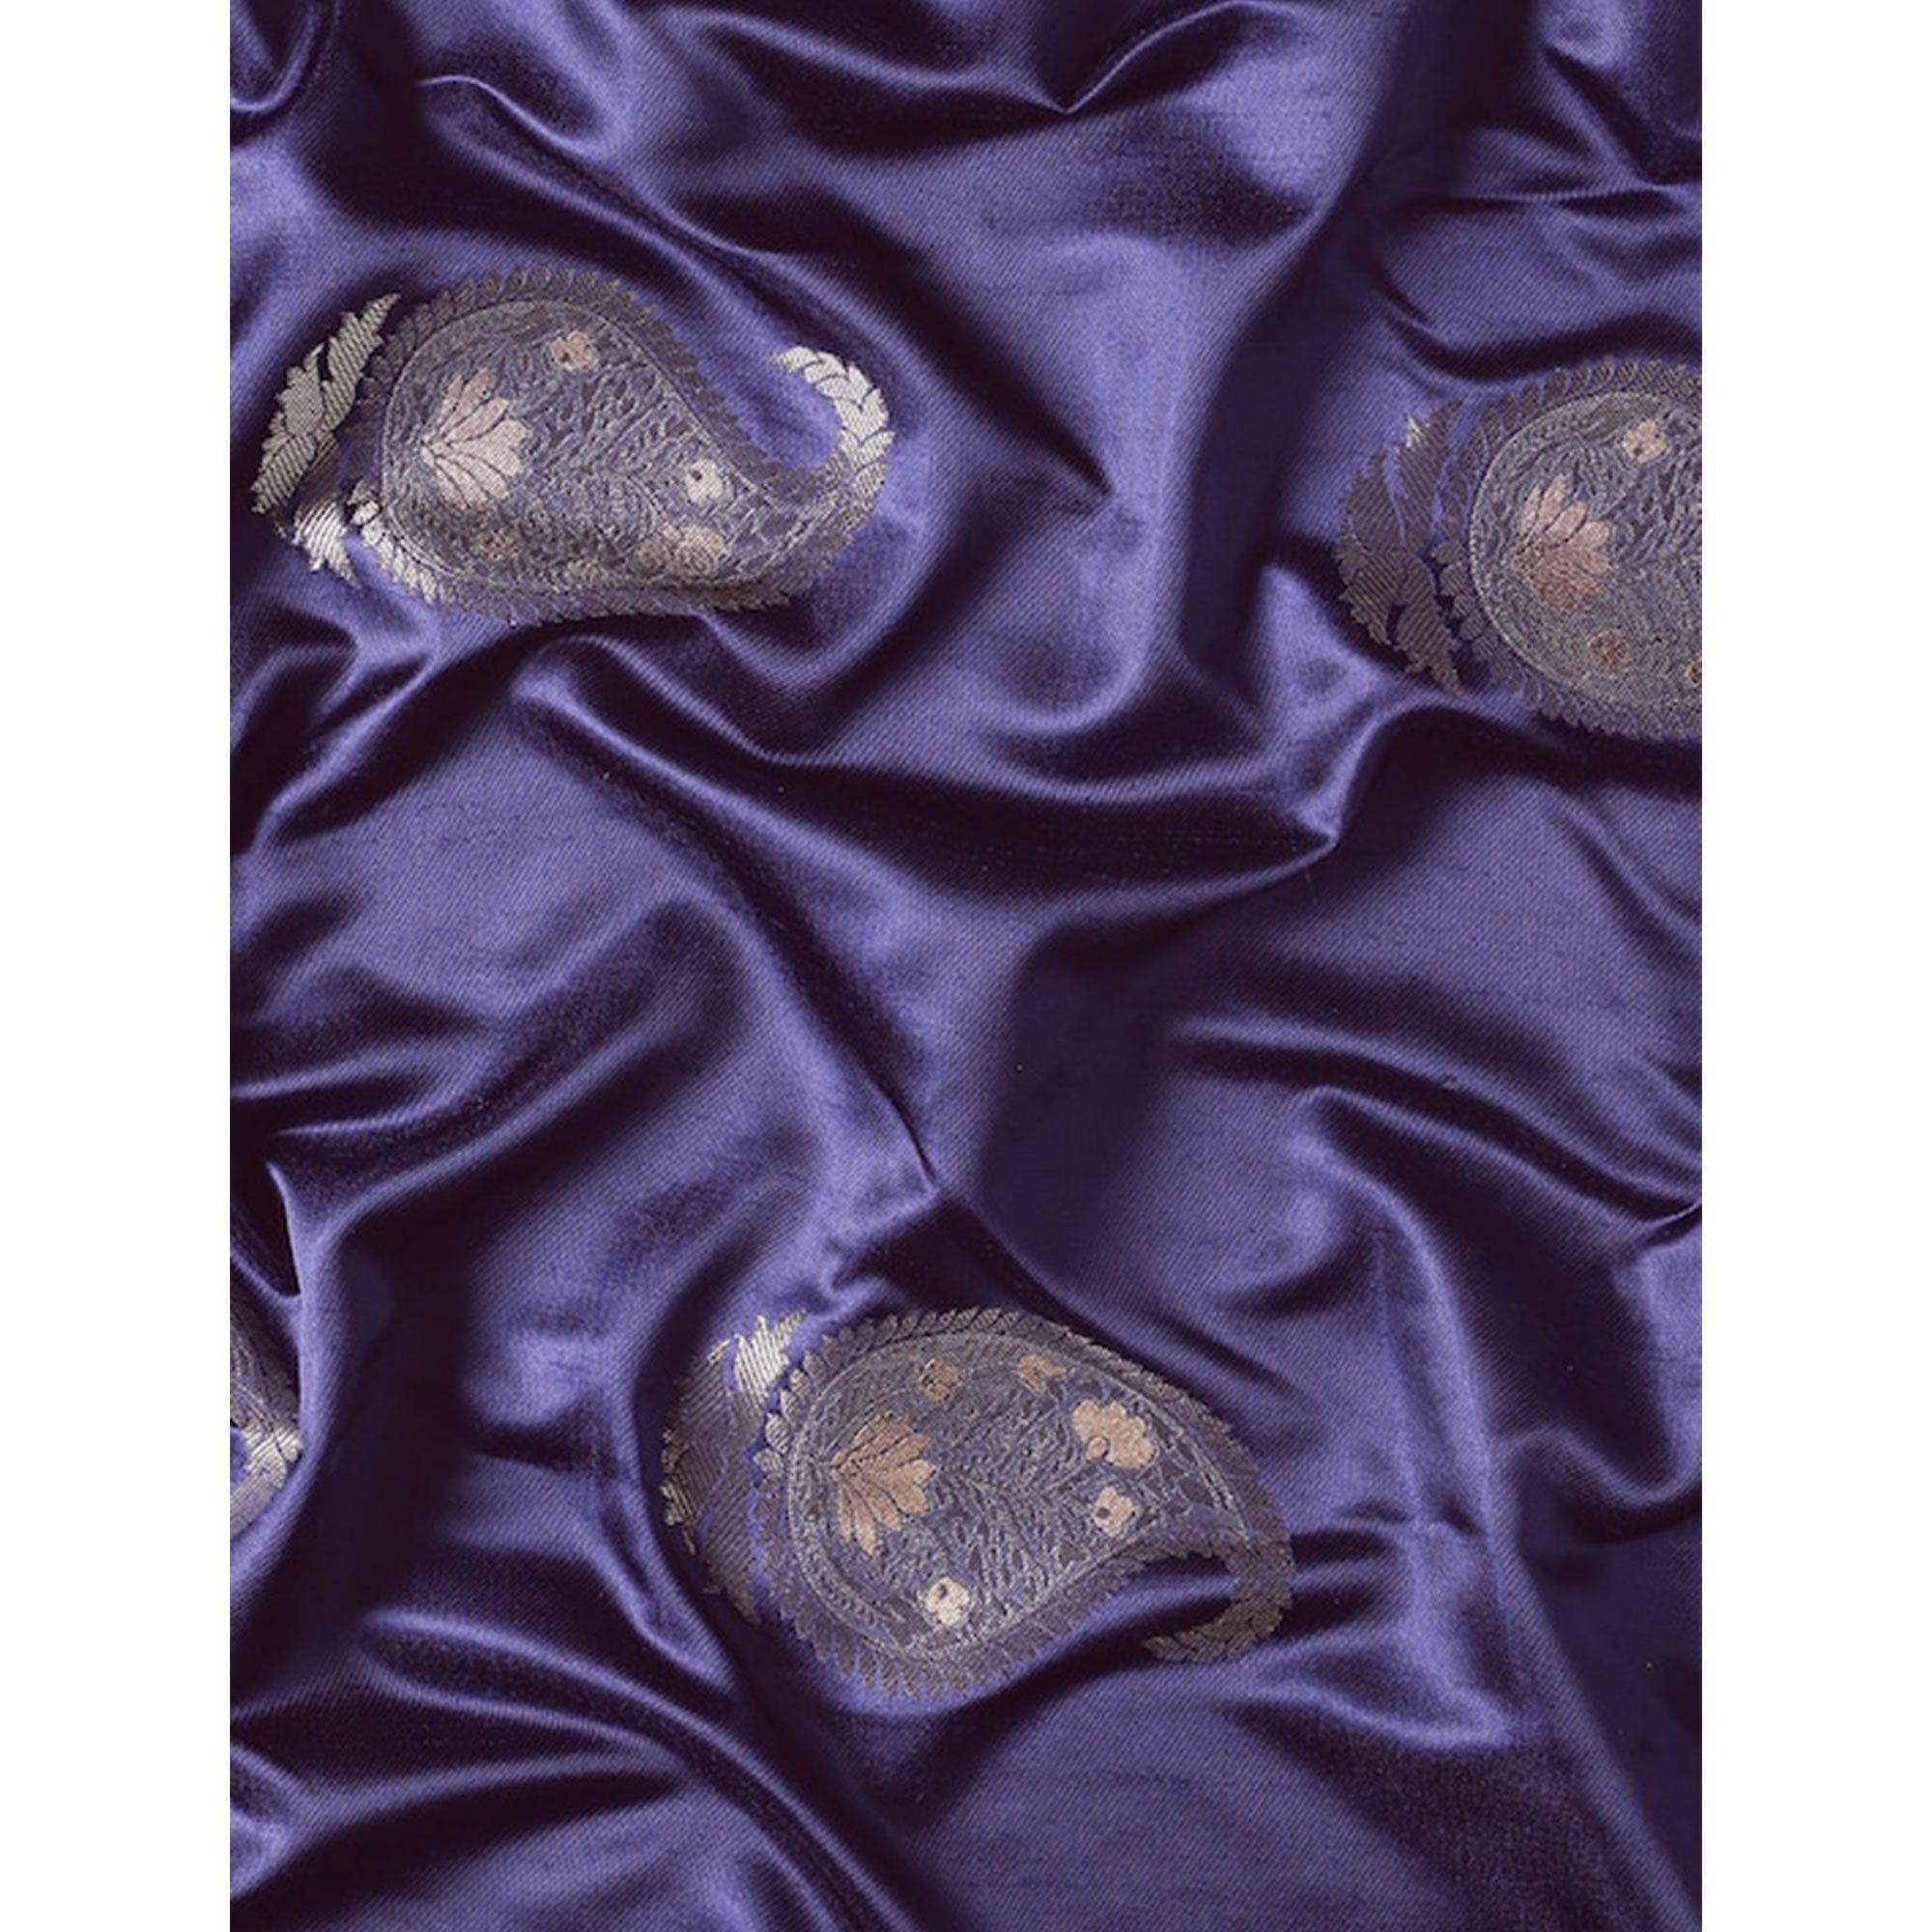 Blue Woven Kanjivaram Silk Saree WithTassels